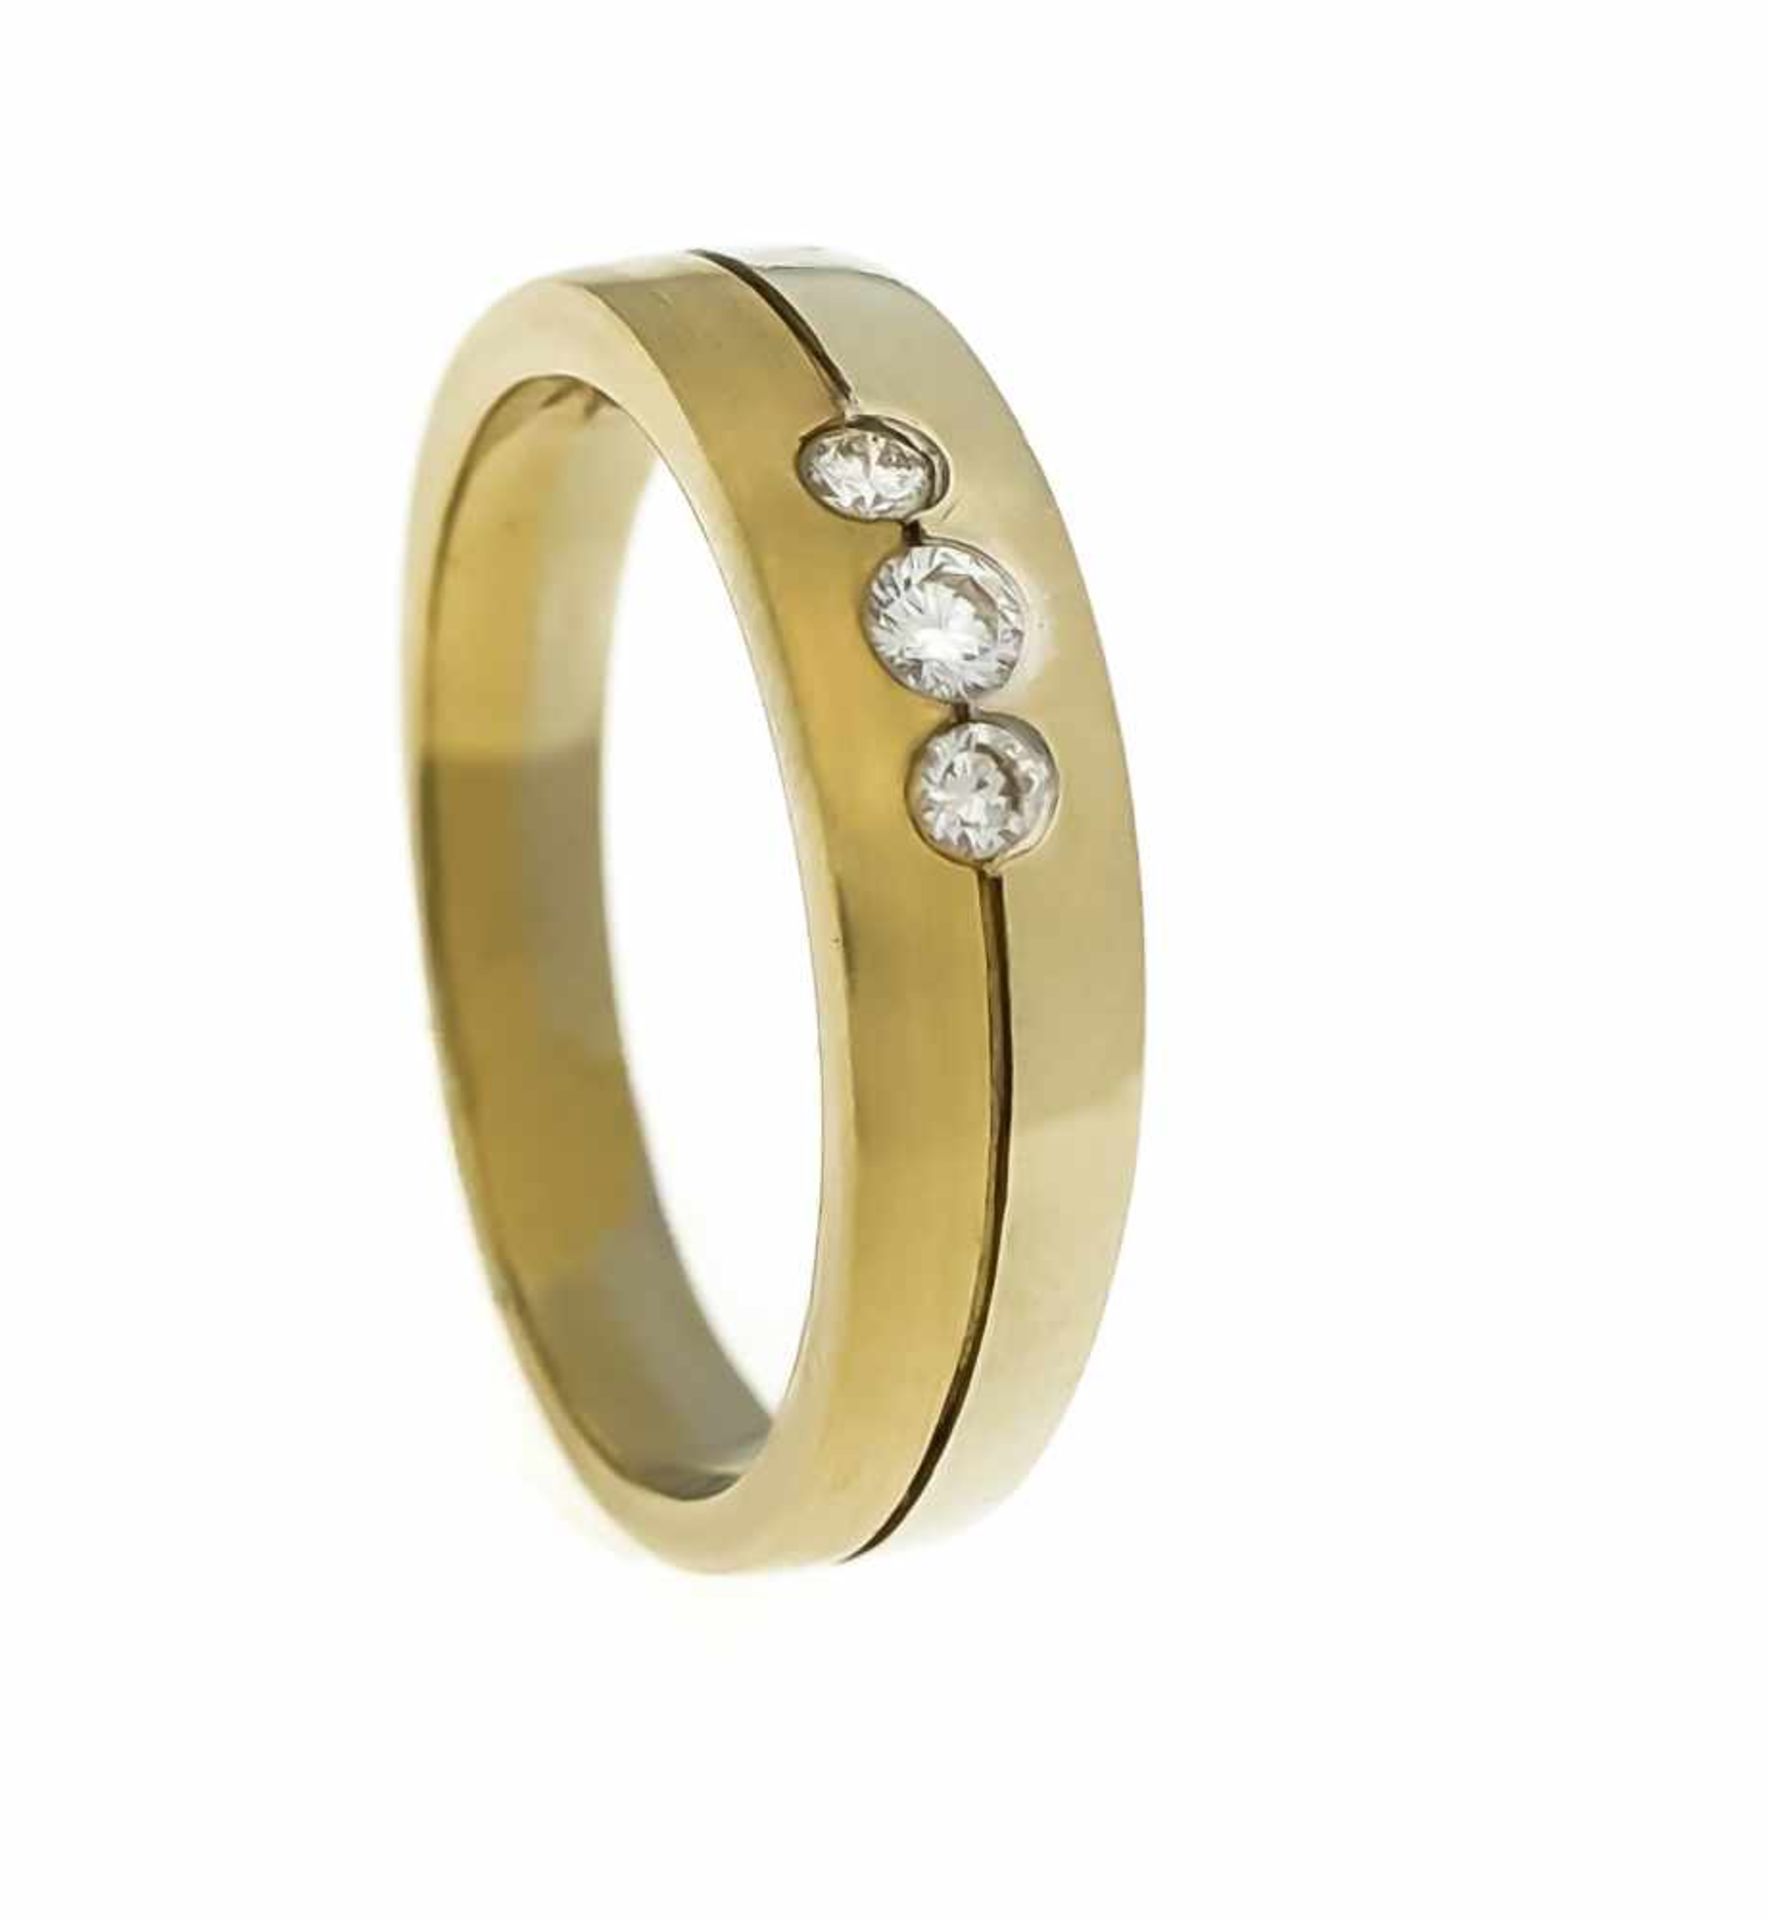 Brillant-Ring Christ GG/WG 585/000 mit 3 Brillanten, zus. 0,18 ct TW/VS, RG 58, 4,6 gBrilliant